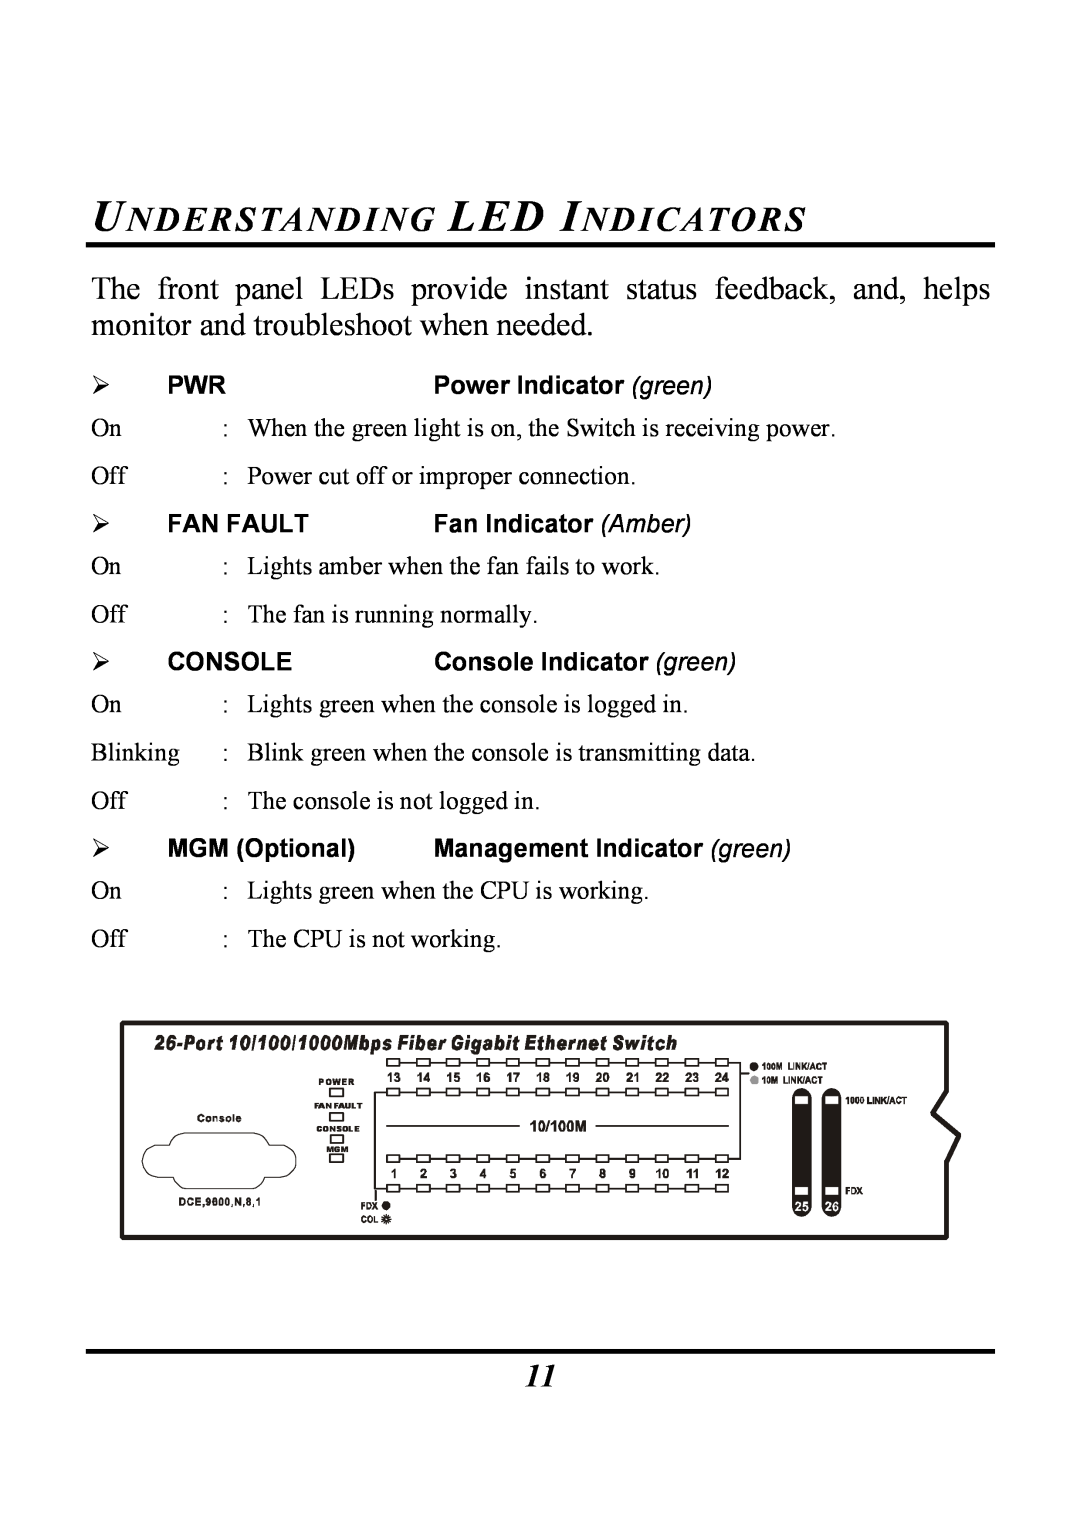 Atlantis Land Rack Gigabit Switch Layer 2 manual Understanding Led Indicators, Power Indicator green, Fan Fault, Console 